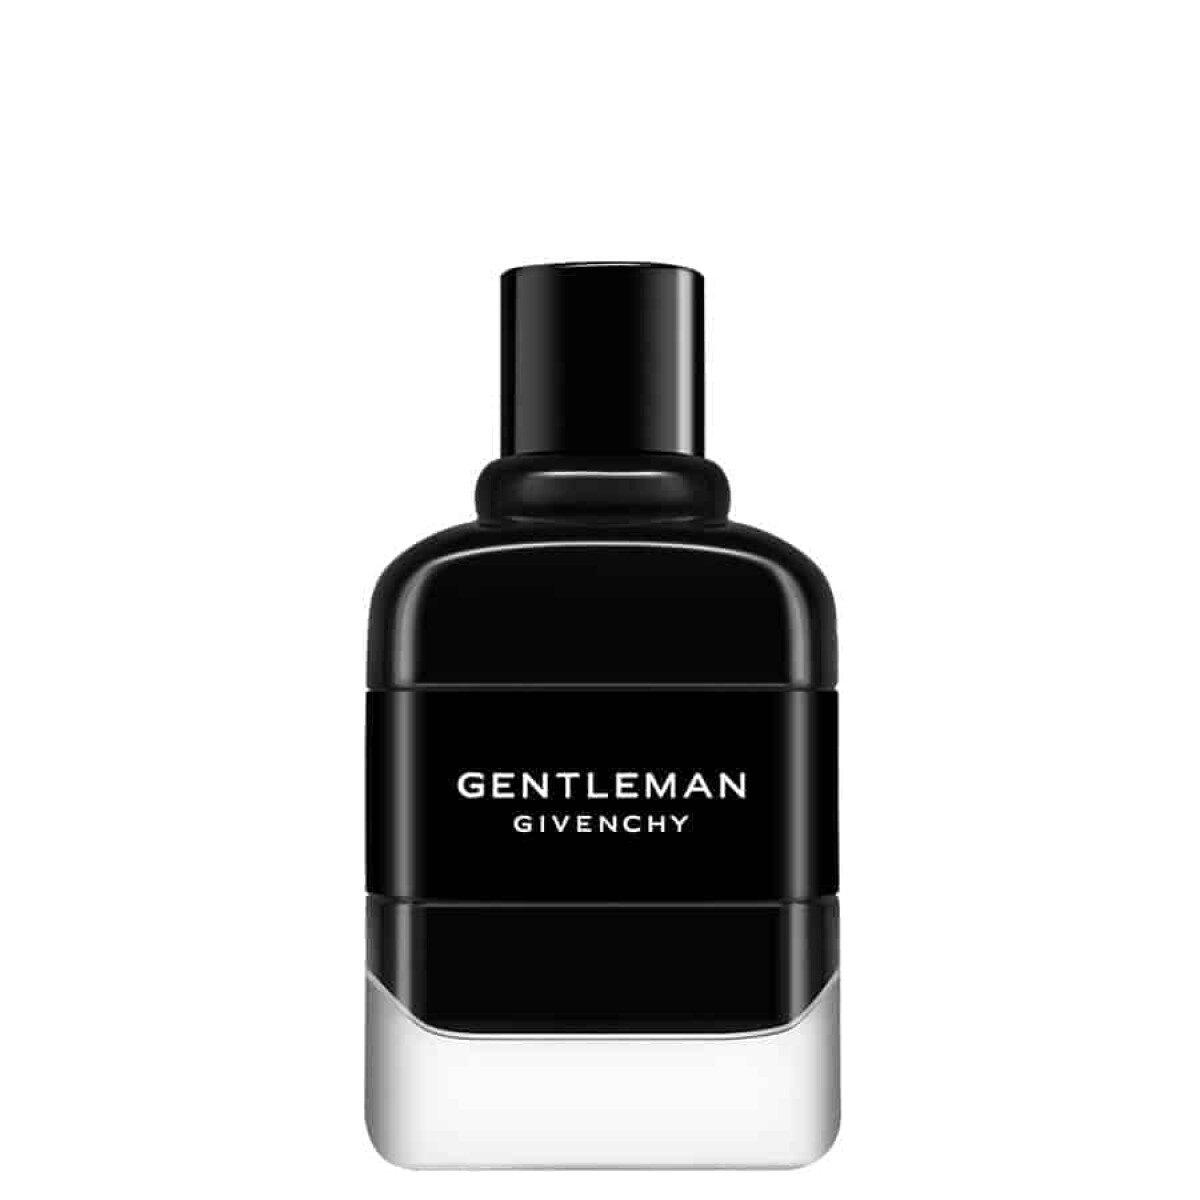 Perfume Givenchy Gentleman Edp 50 ml 